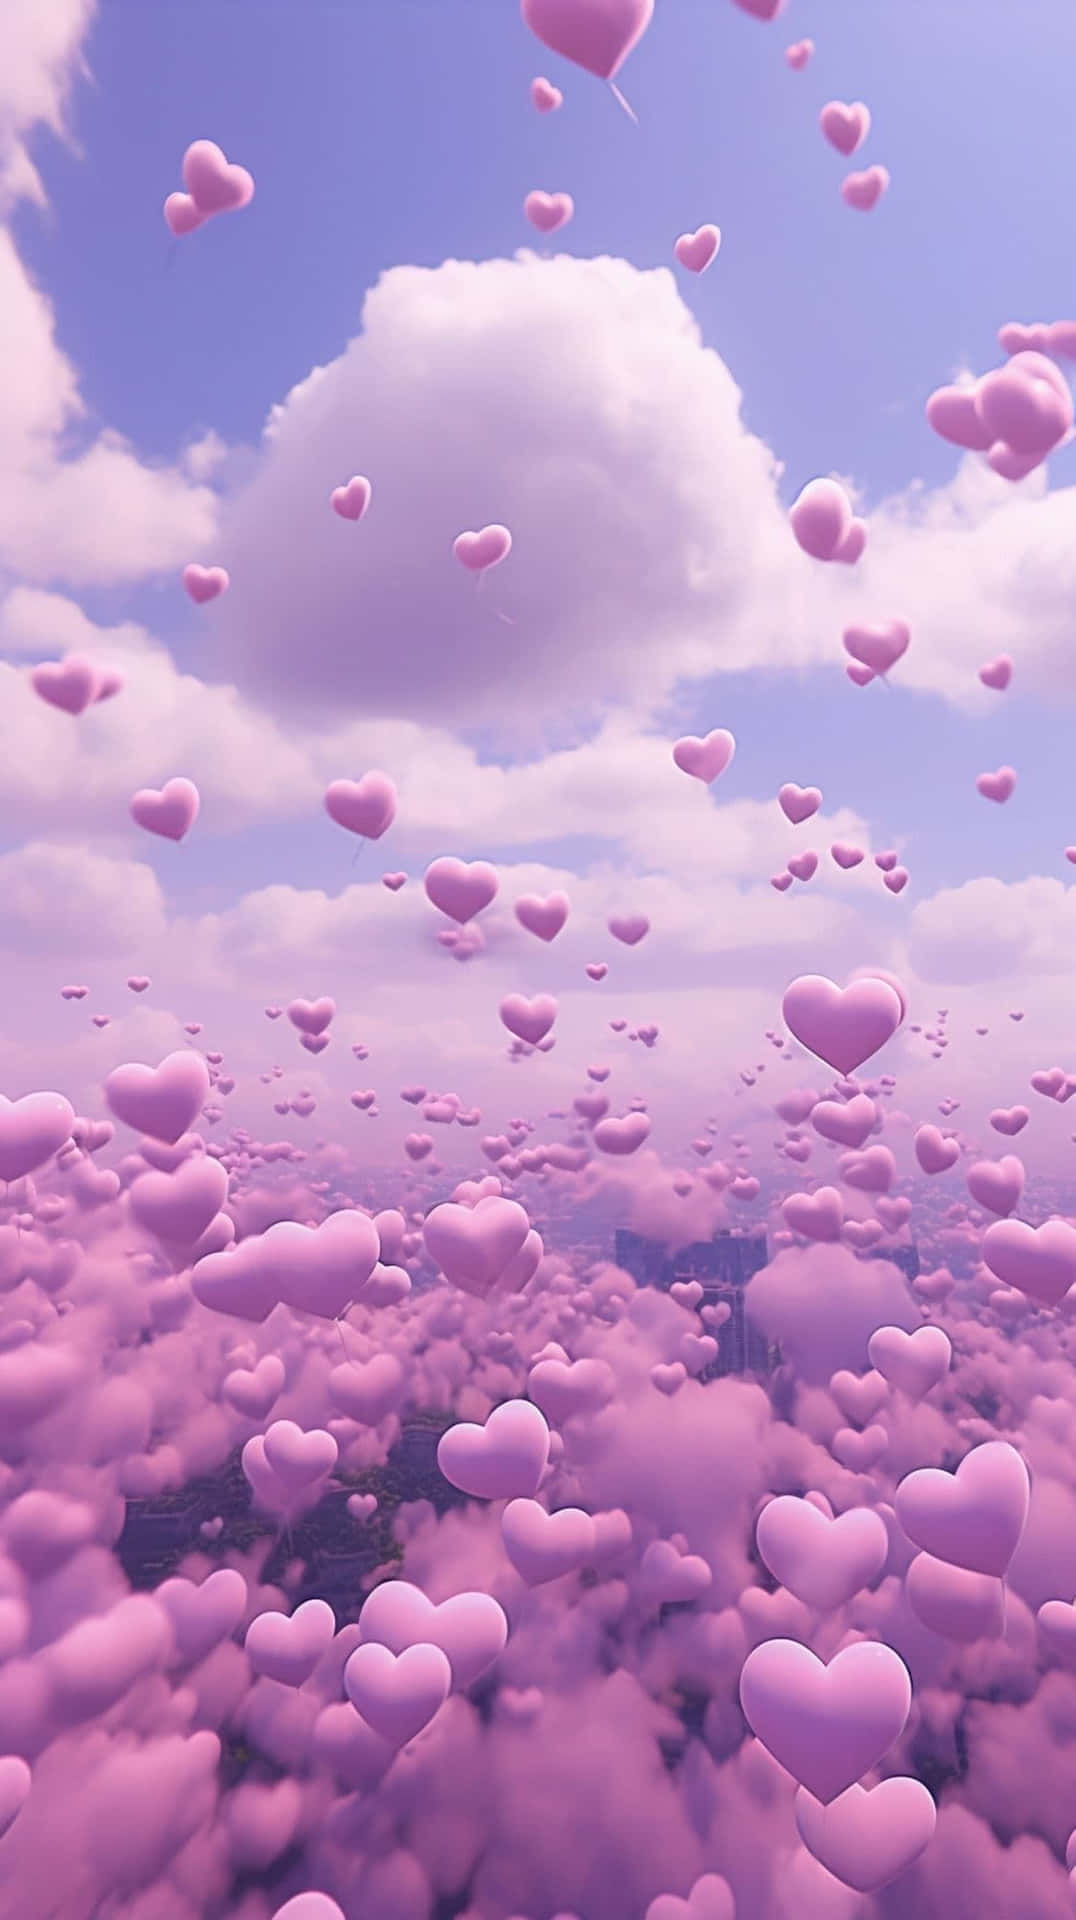 Pink Hearts Cloudscape Romantic Aesthetic Wallpaper